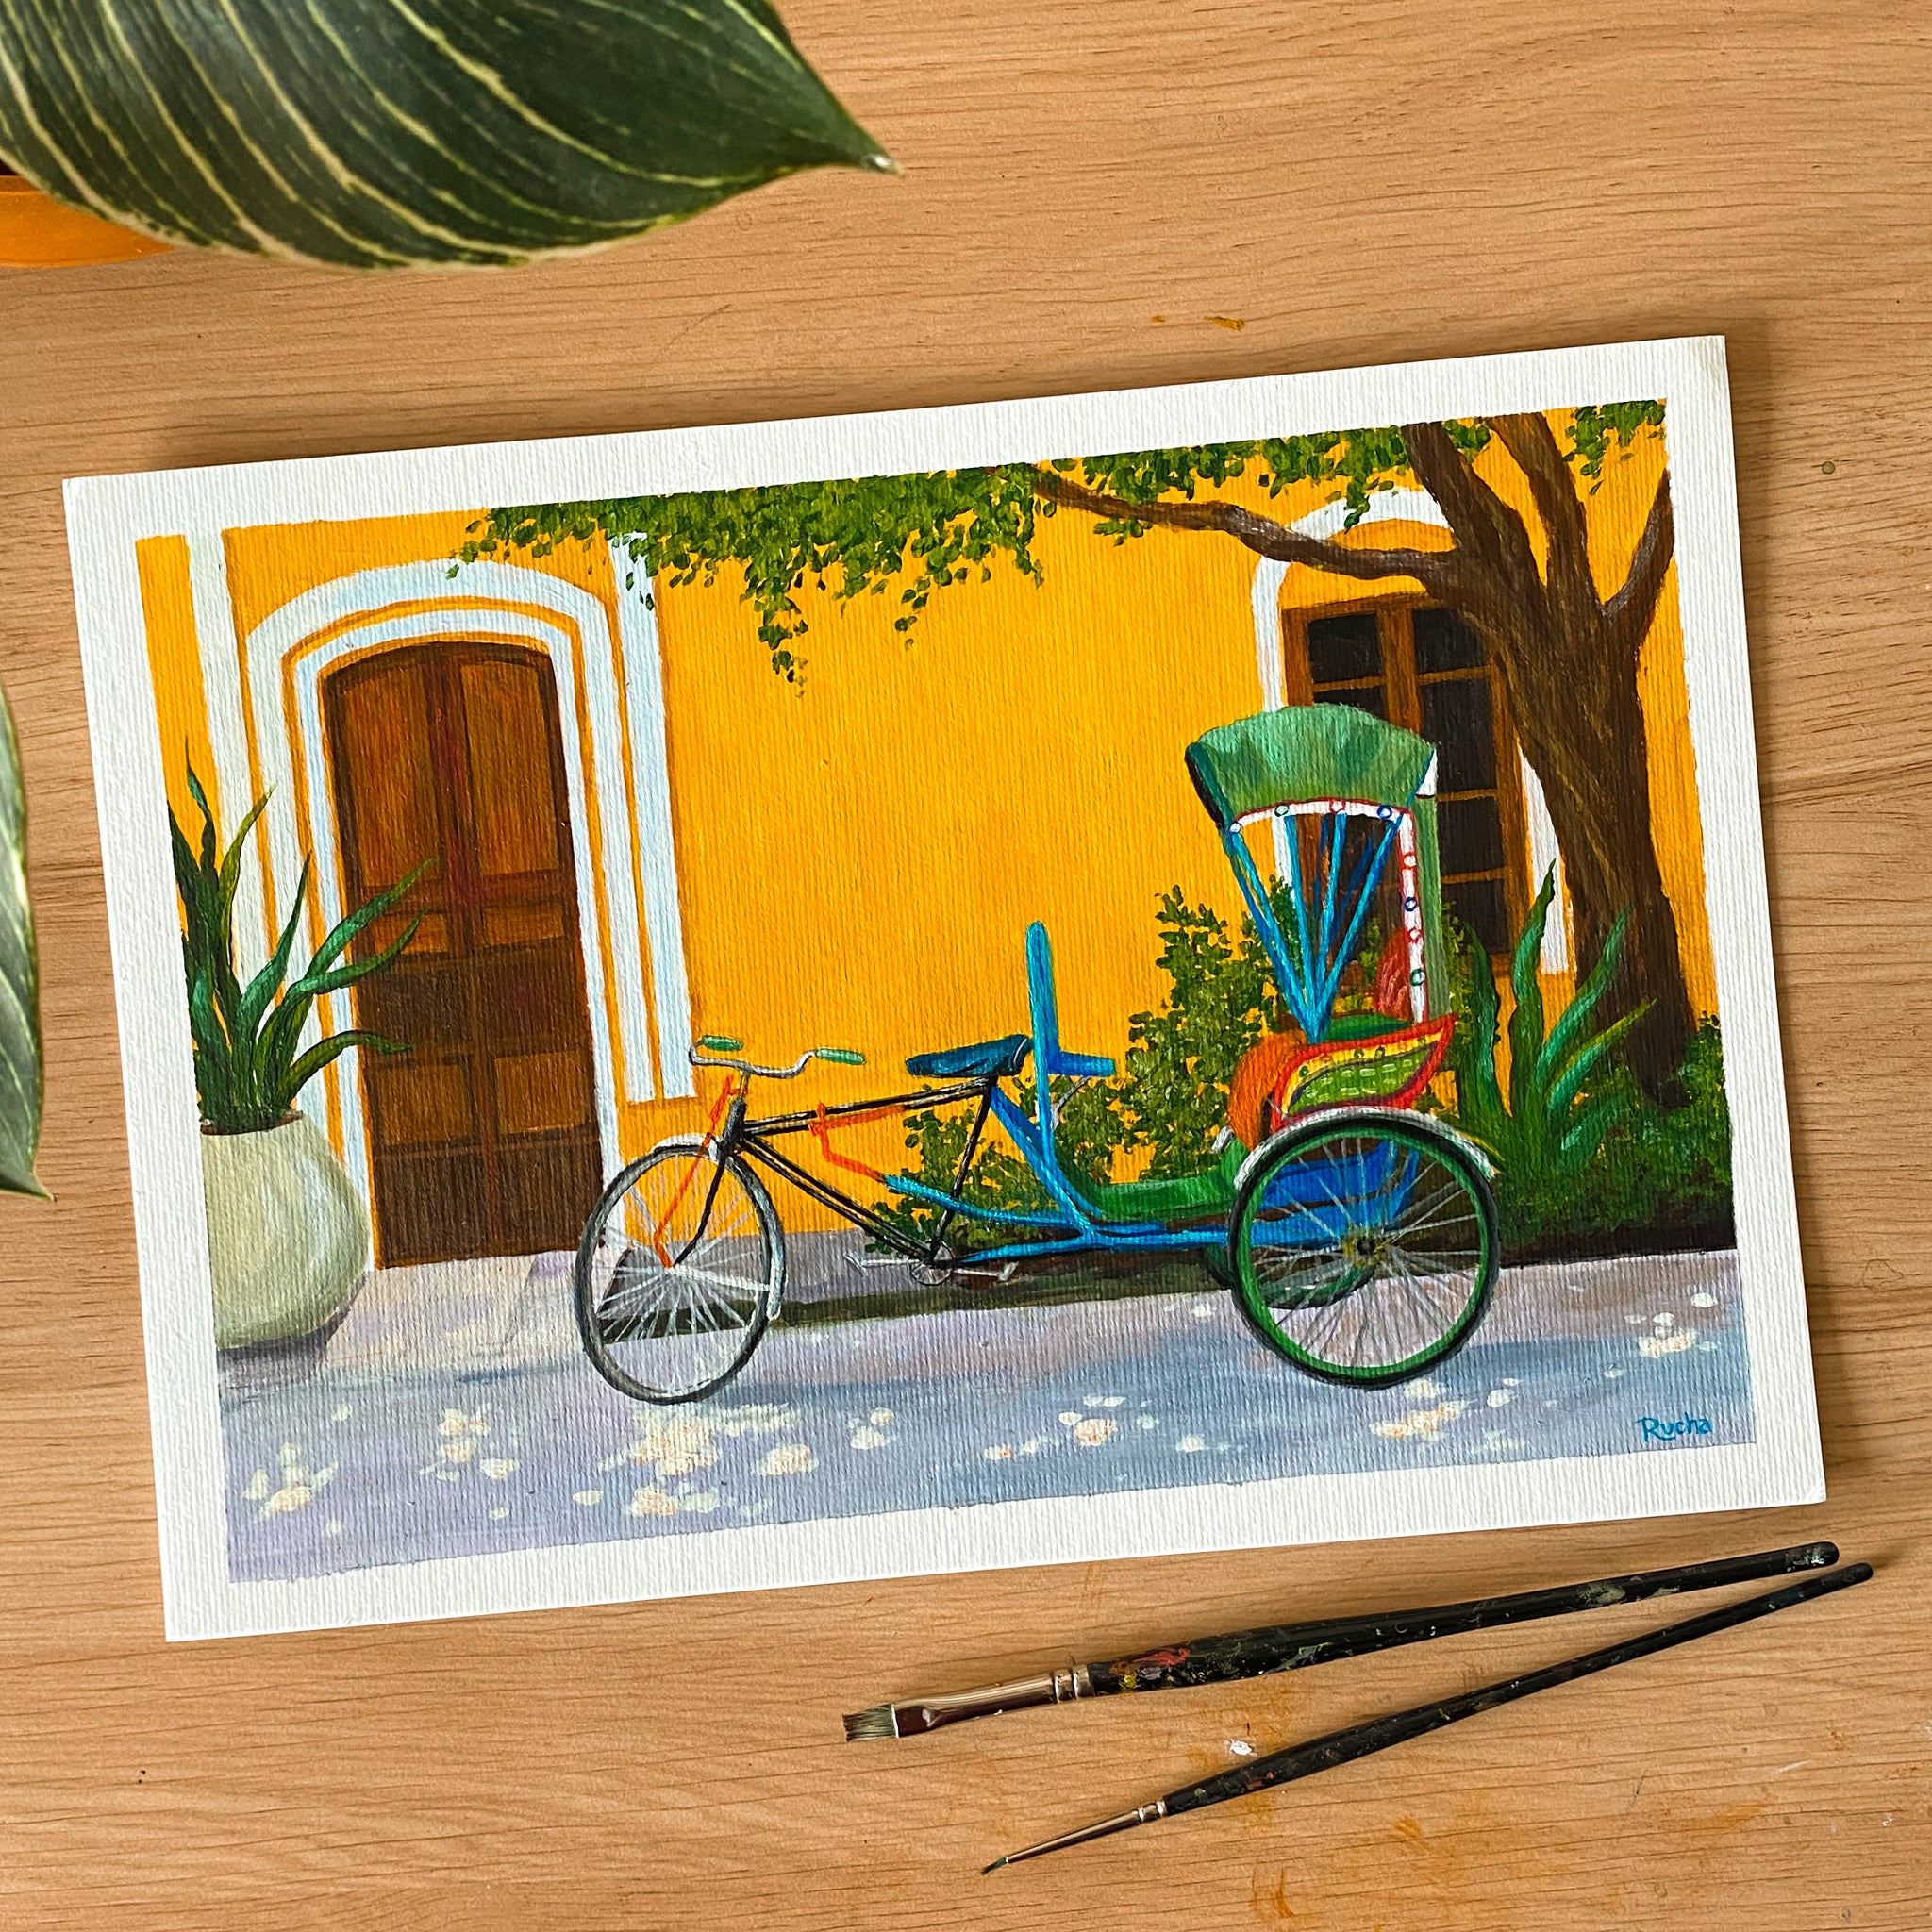 Pondicherry painting cycle rickshaw